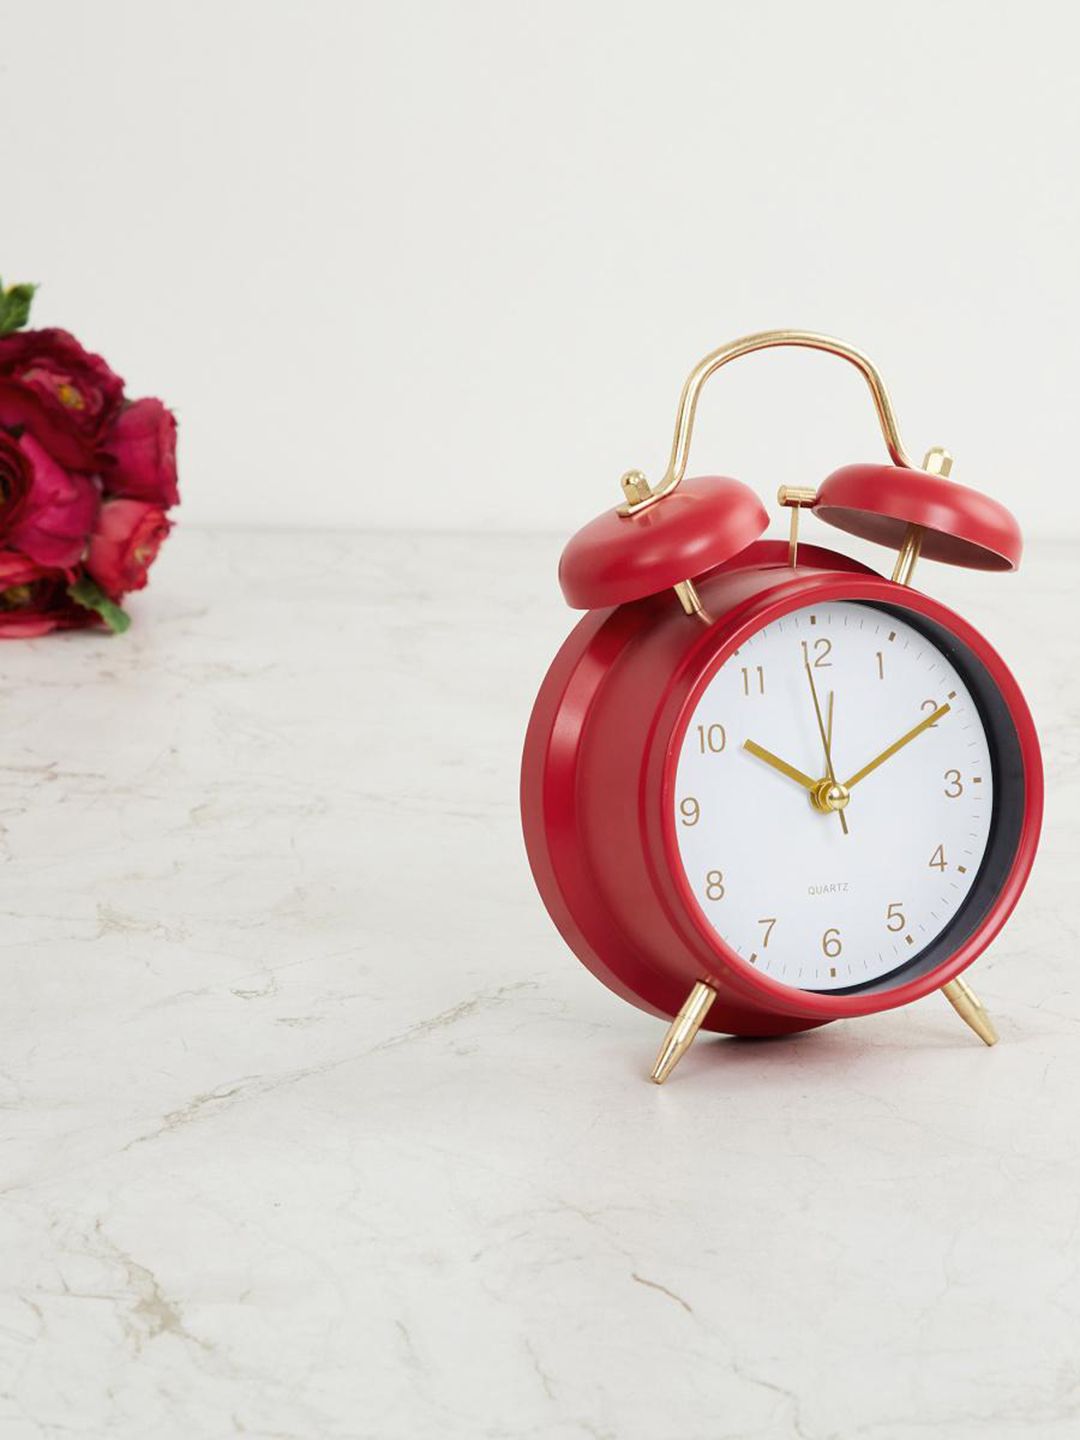 Home Centre Red & White Vintage Alarm Clock Price in India